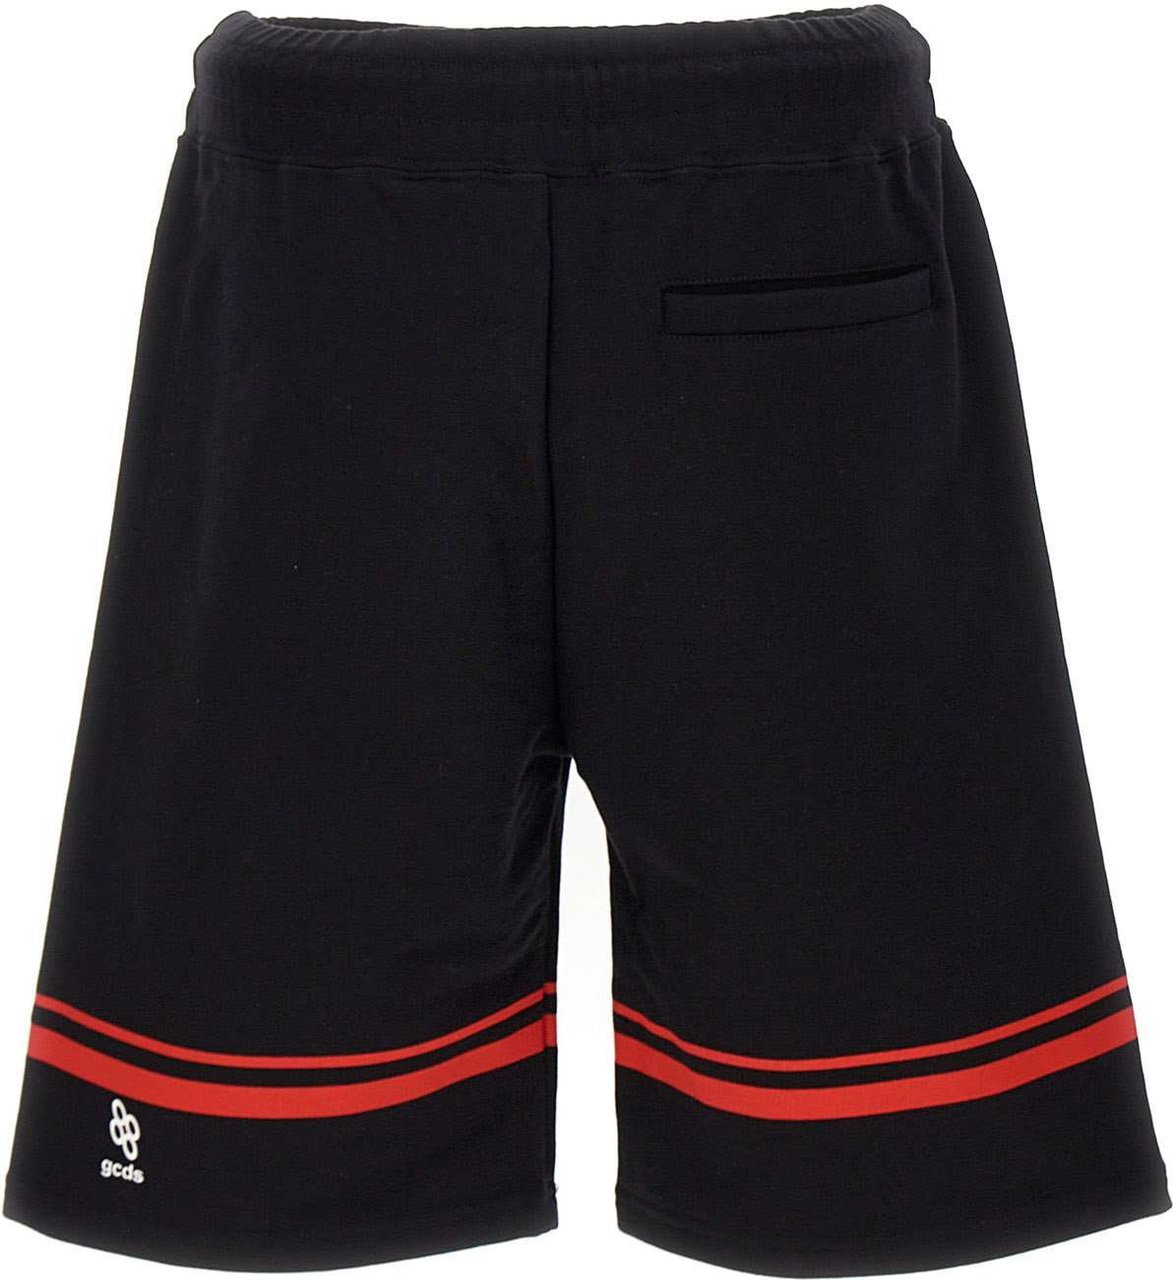 GCDS Shorts Black Zwart